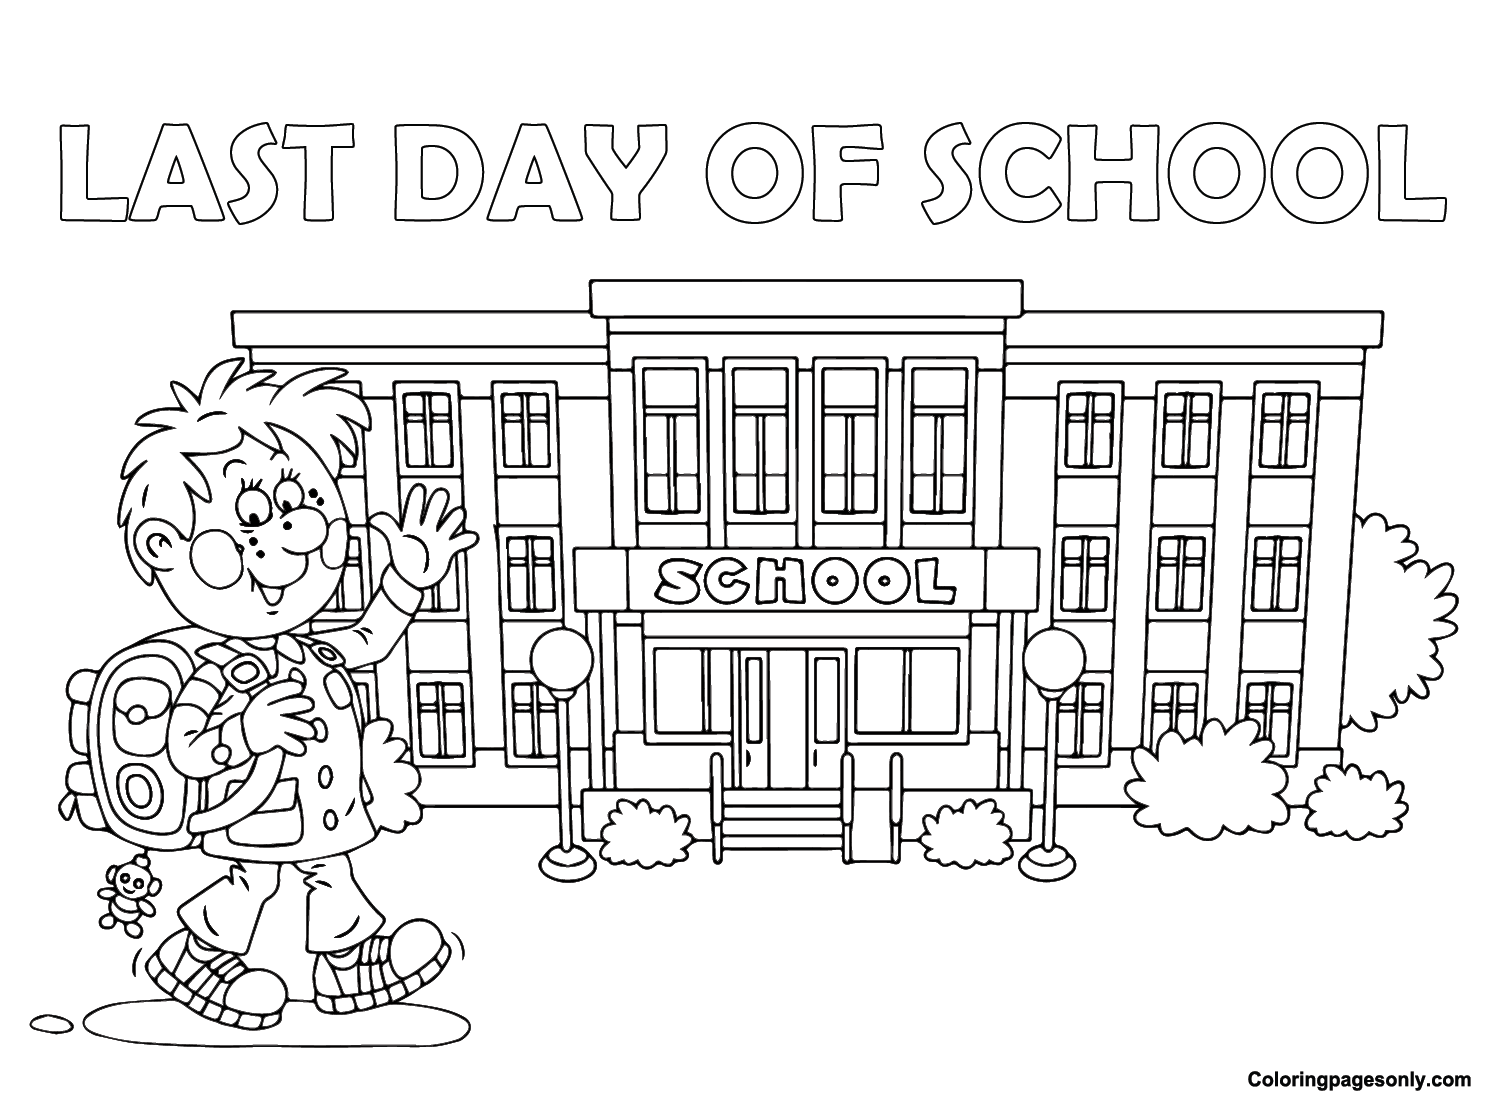 Happy Last Day of School from Last Day of School